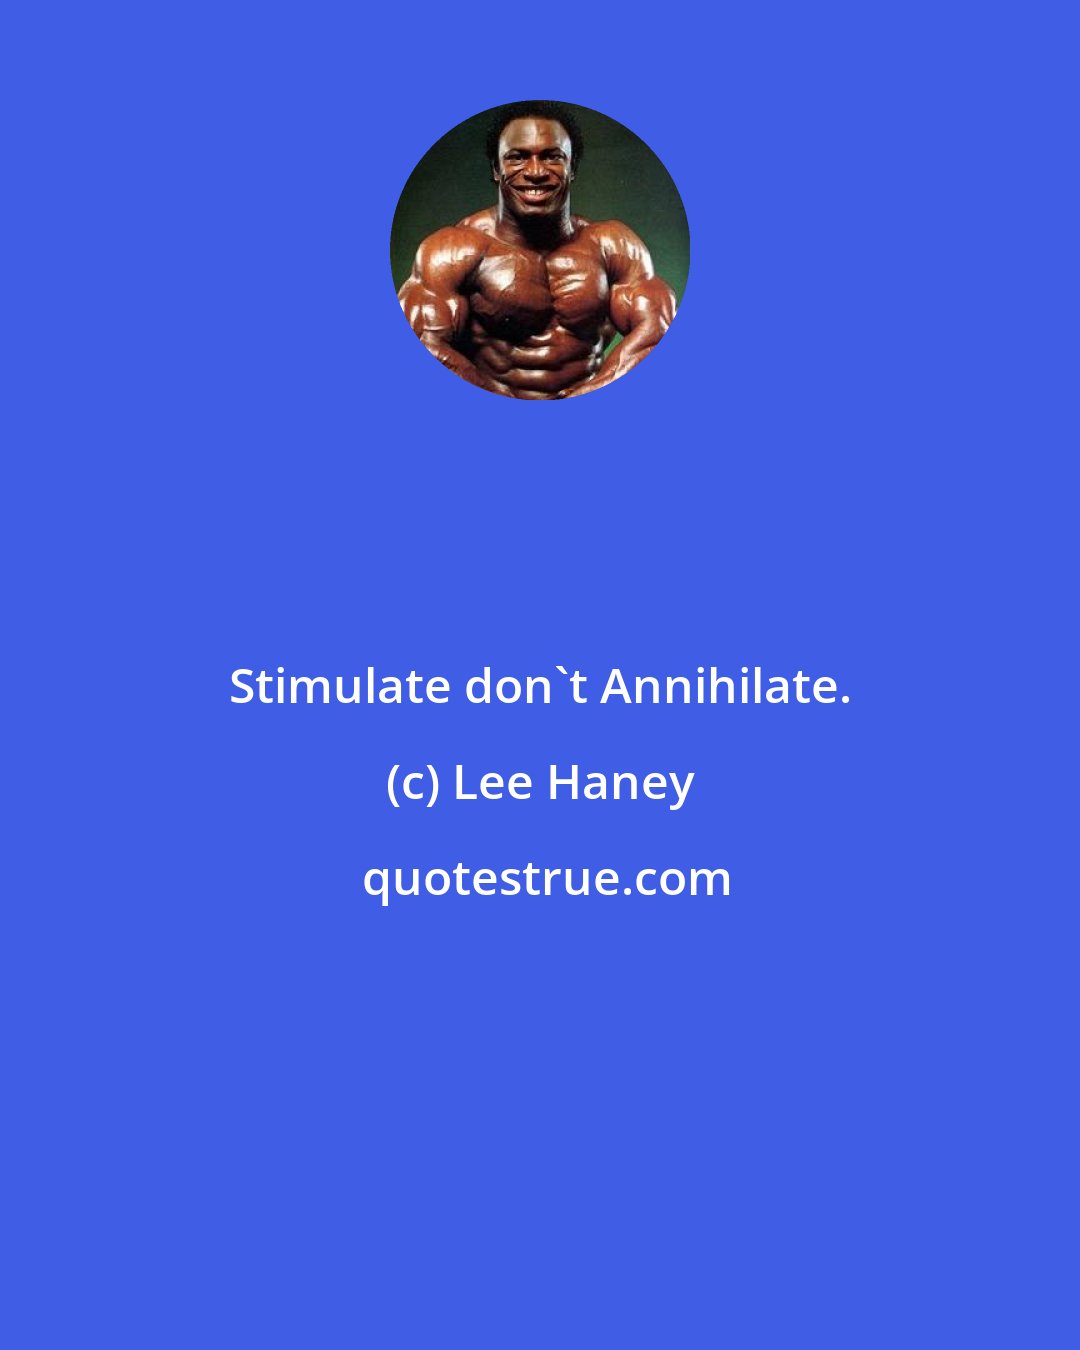 Lee Haney: Stimulate don't Annihilate.